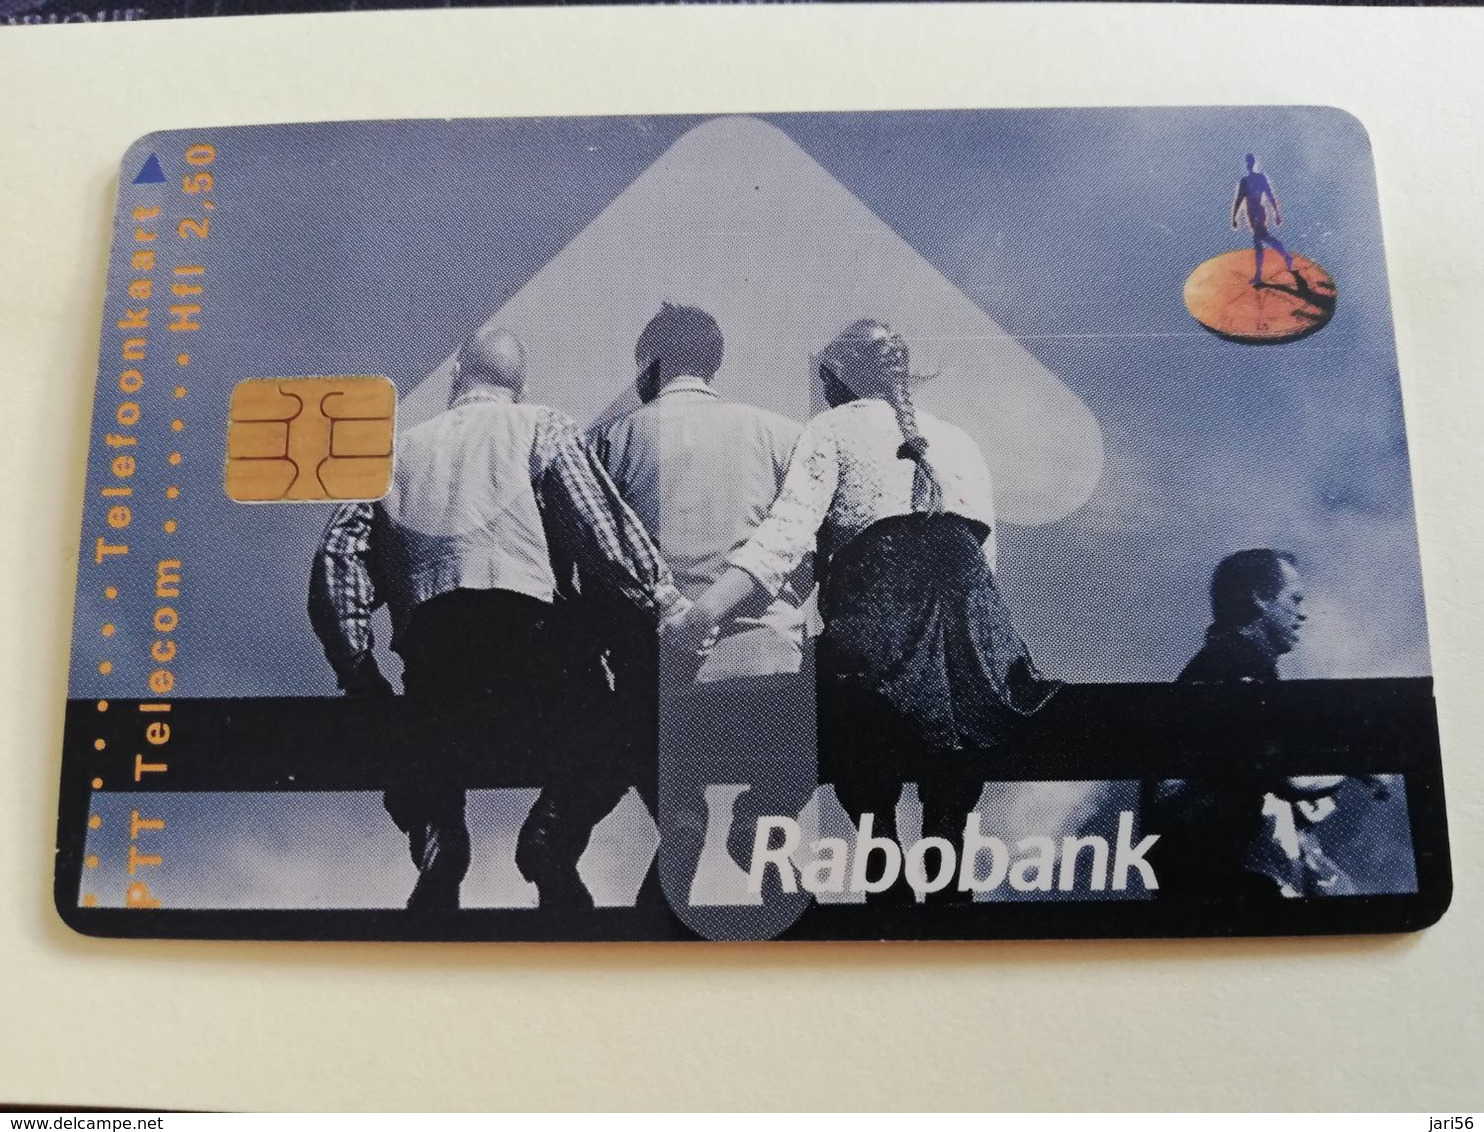 NETHERLANDS  ADVERTISING CHIPCARD HFL 2,50   CRD 378.01   RABOBANK  BANKJE            Fine Used   ** 3213** - Private